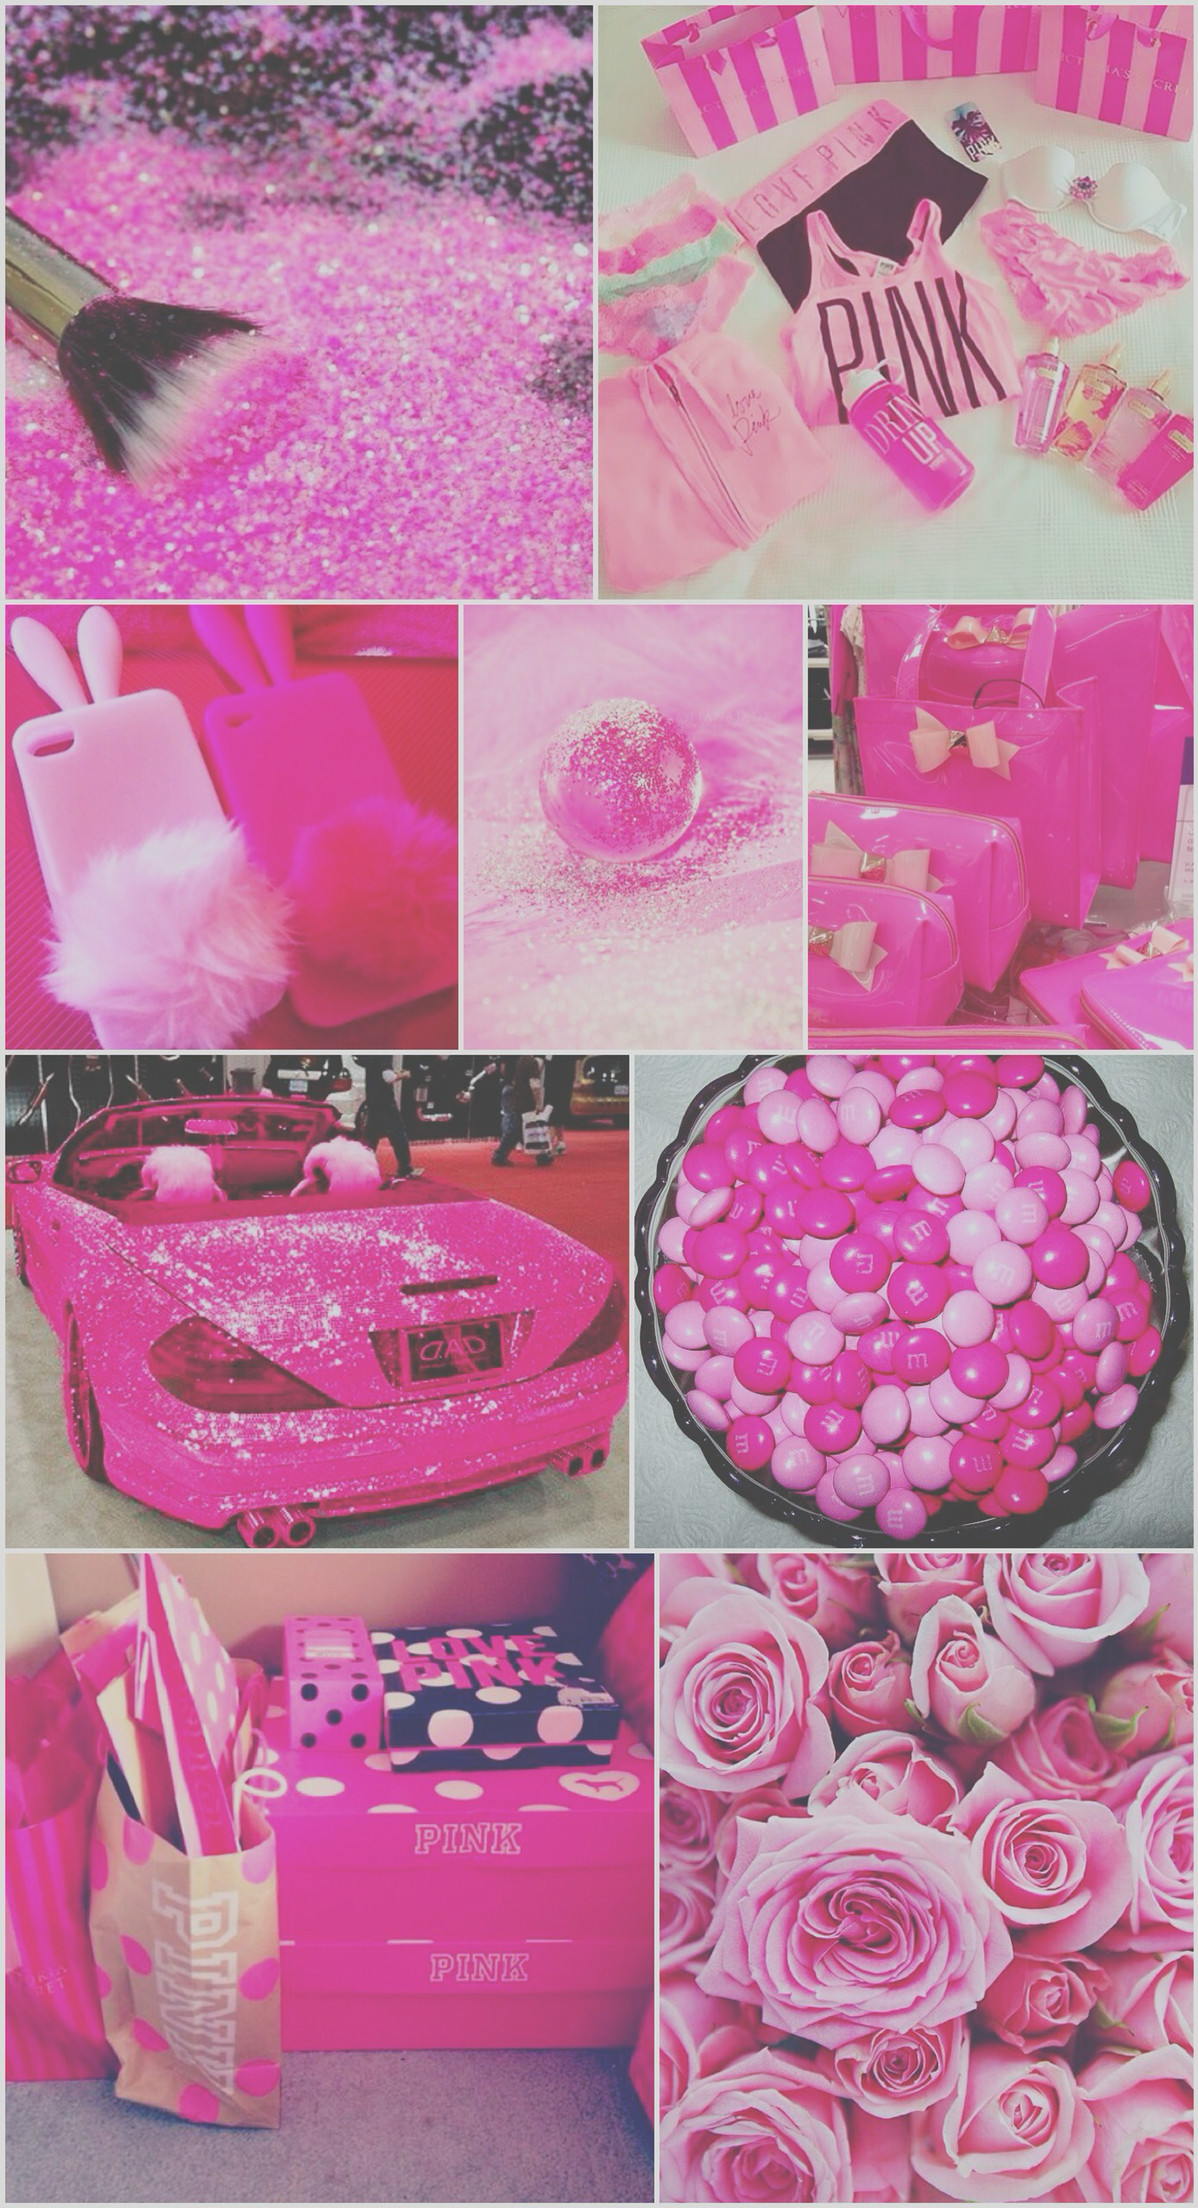 Pink Stuff Wallpaper, background, iPhone, cute, pretty, glitter, food